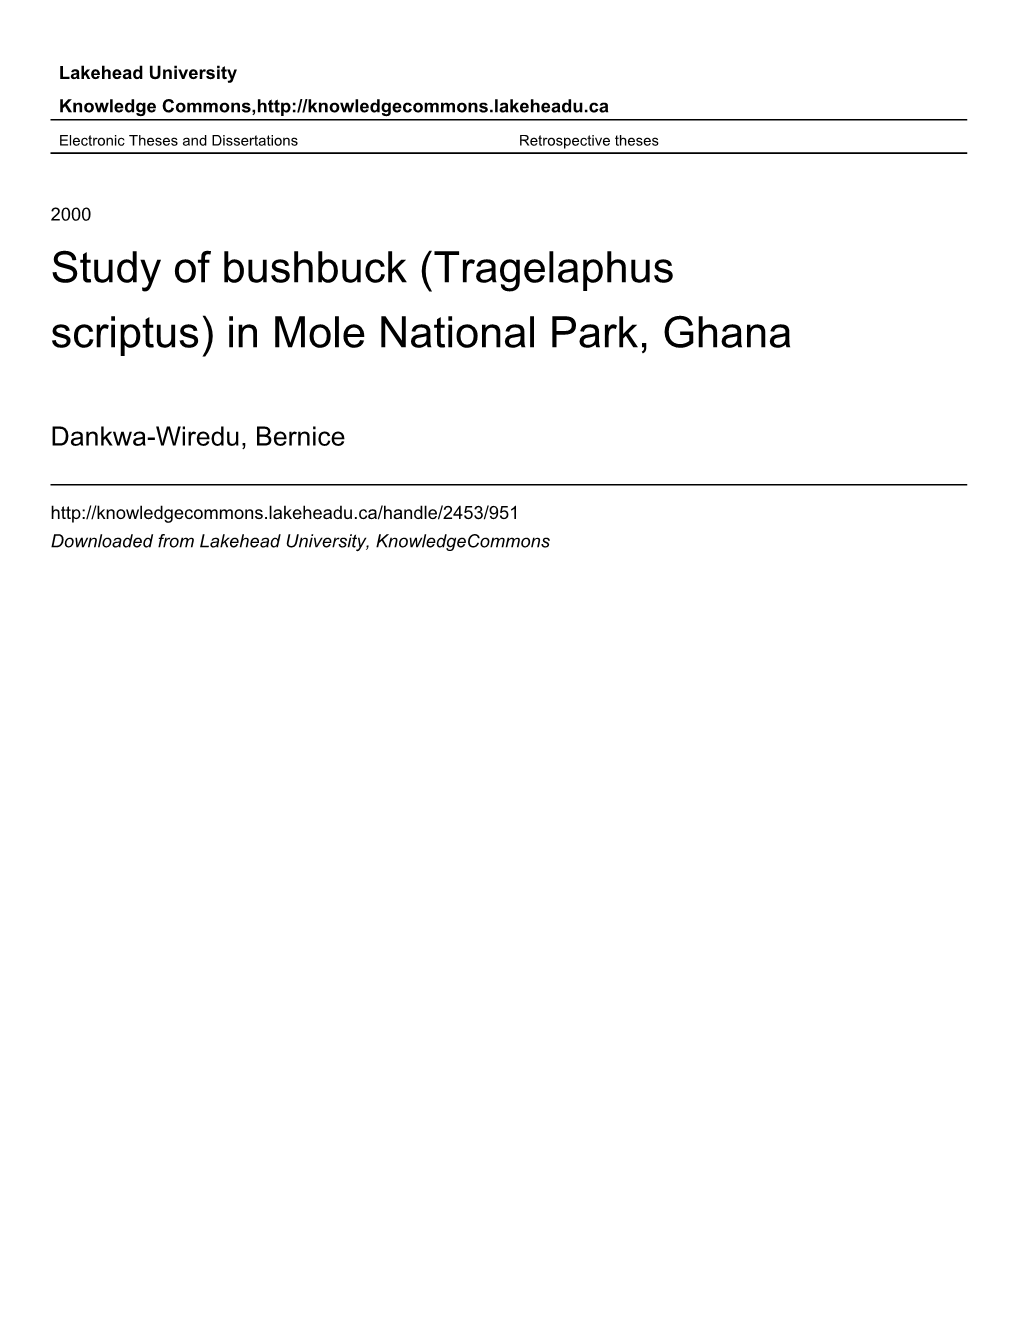 Tragelaphus Scriptus) in Mole National Park, Ghana